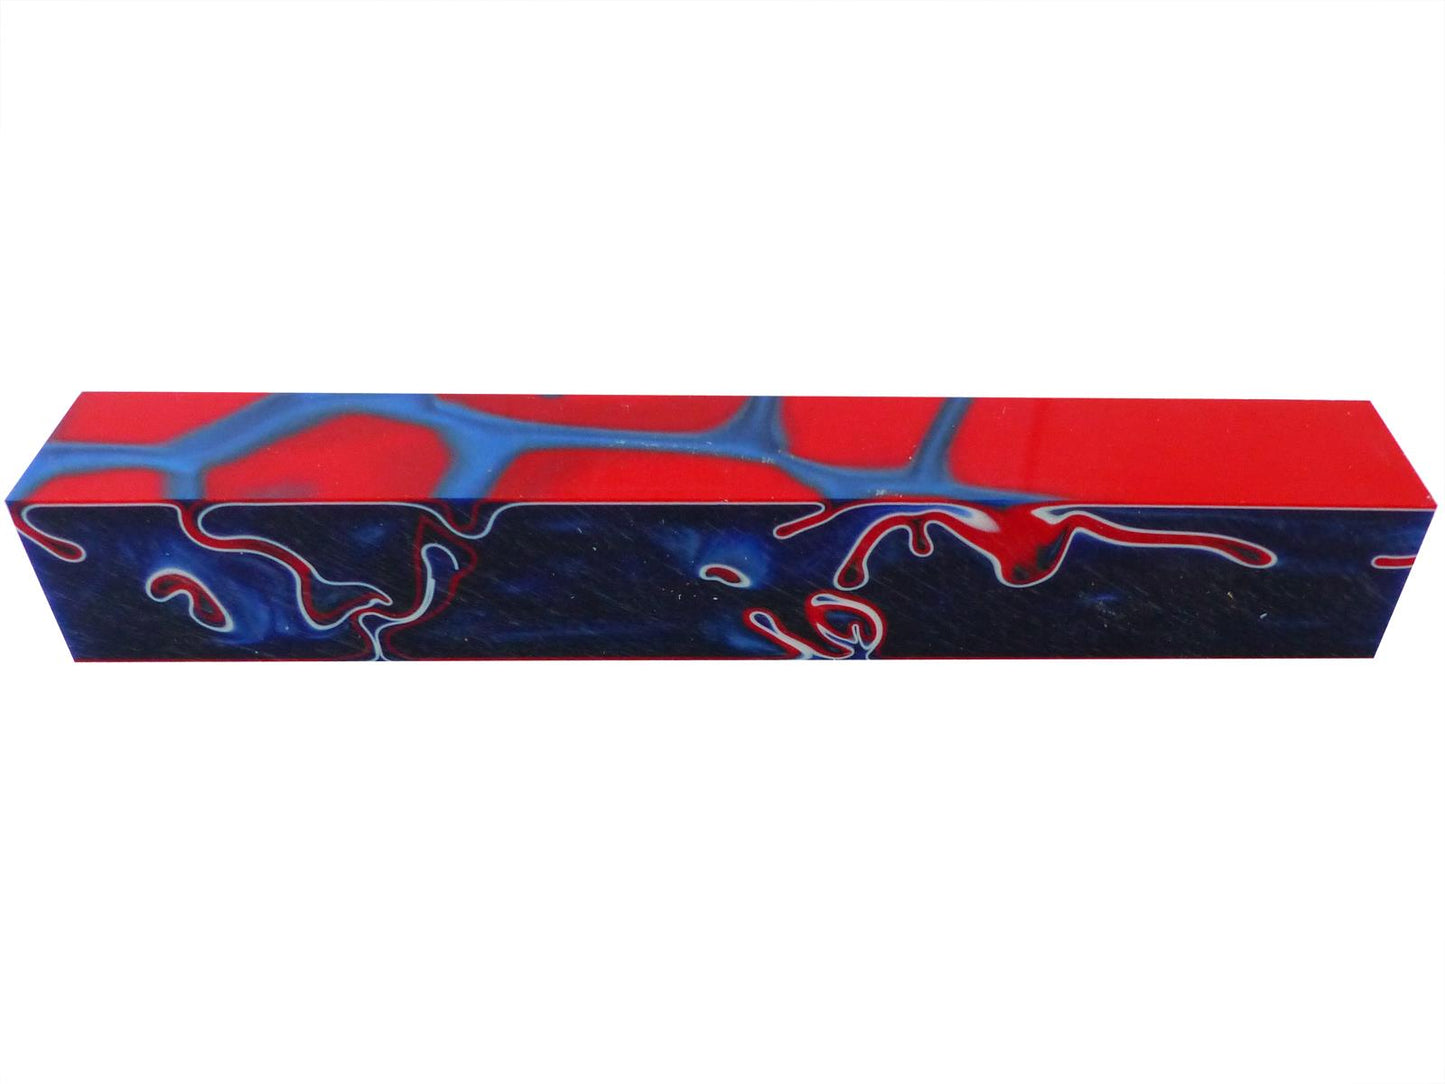 Turners' Mill Kirinite Patriot Blue/Red/White Abstract Kirinite Acrylic Pen Blank - 150x20x20mm (5.9x0.79x0.79"), 6x3/4x3/4"